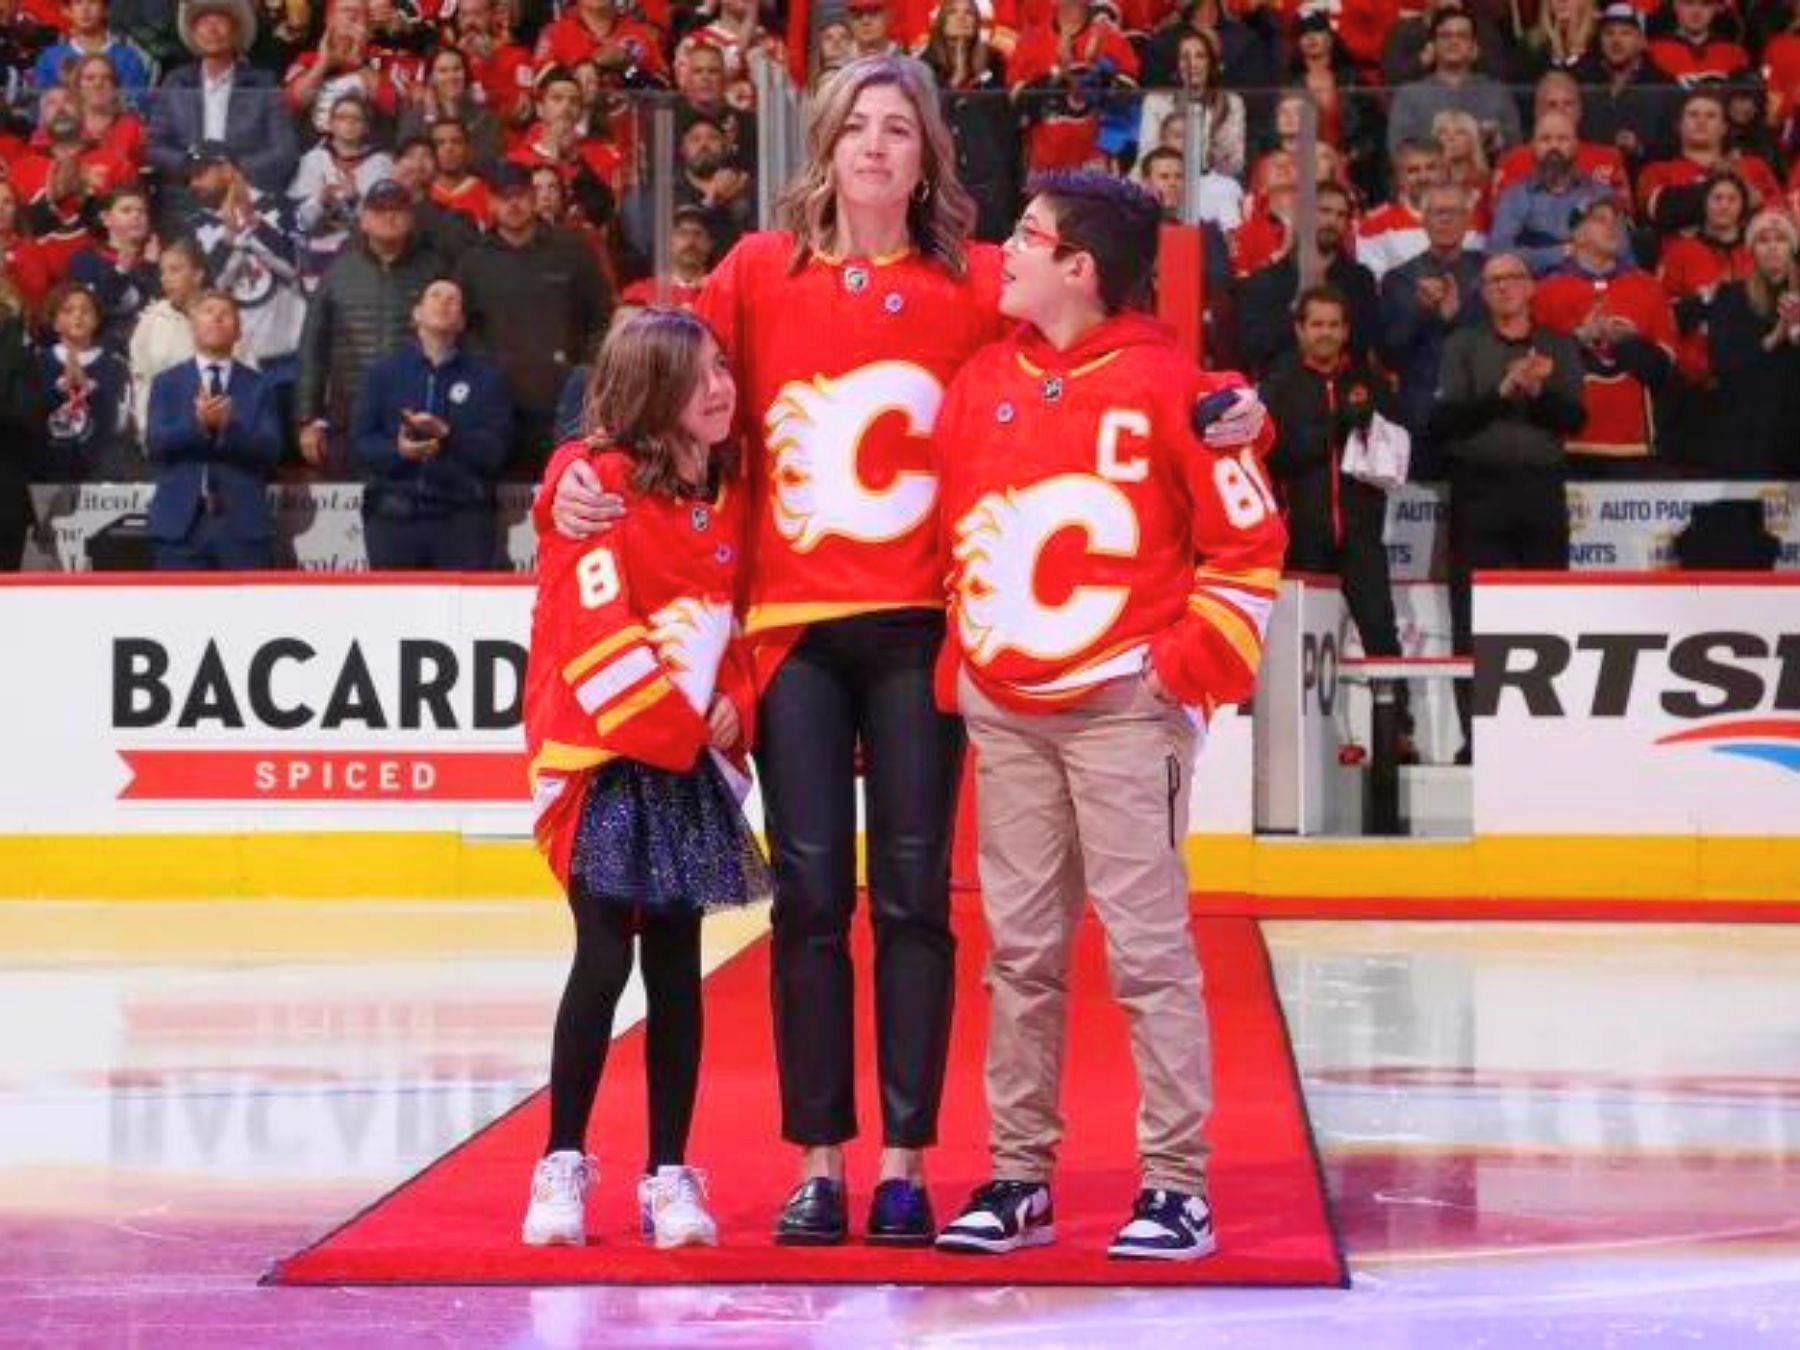 Remembering Chris Snow. Image Credit: (c) Gerry Thomas/NHLI